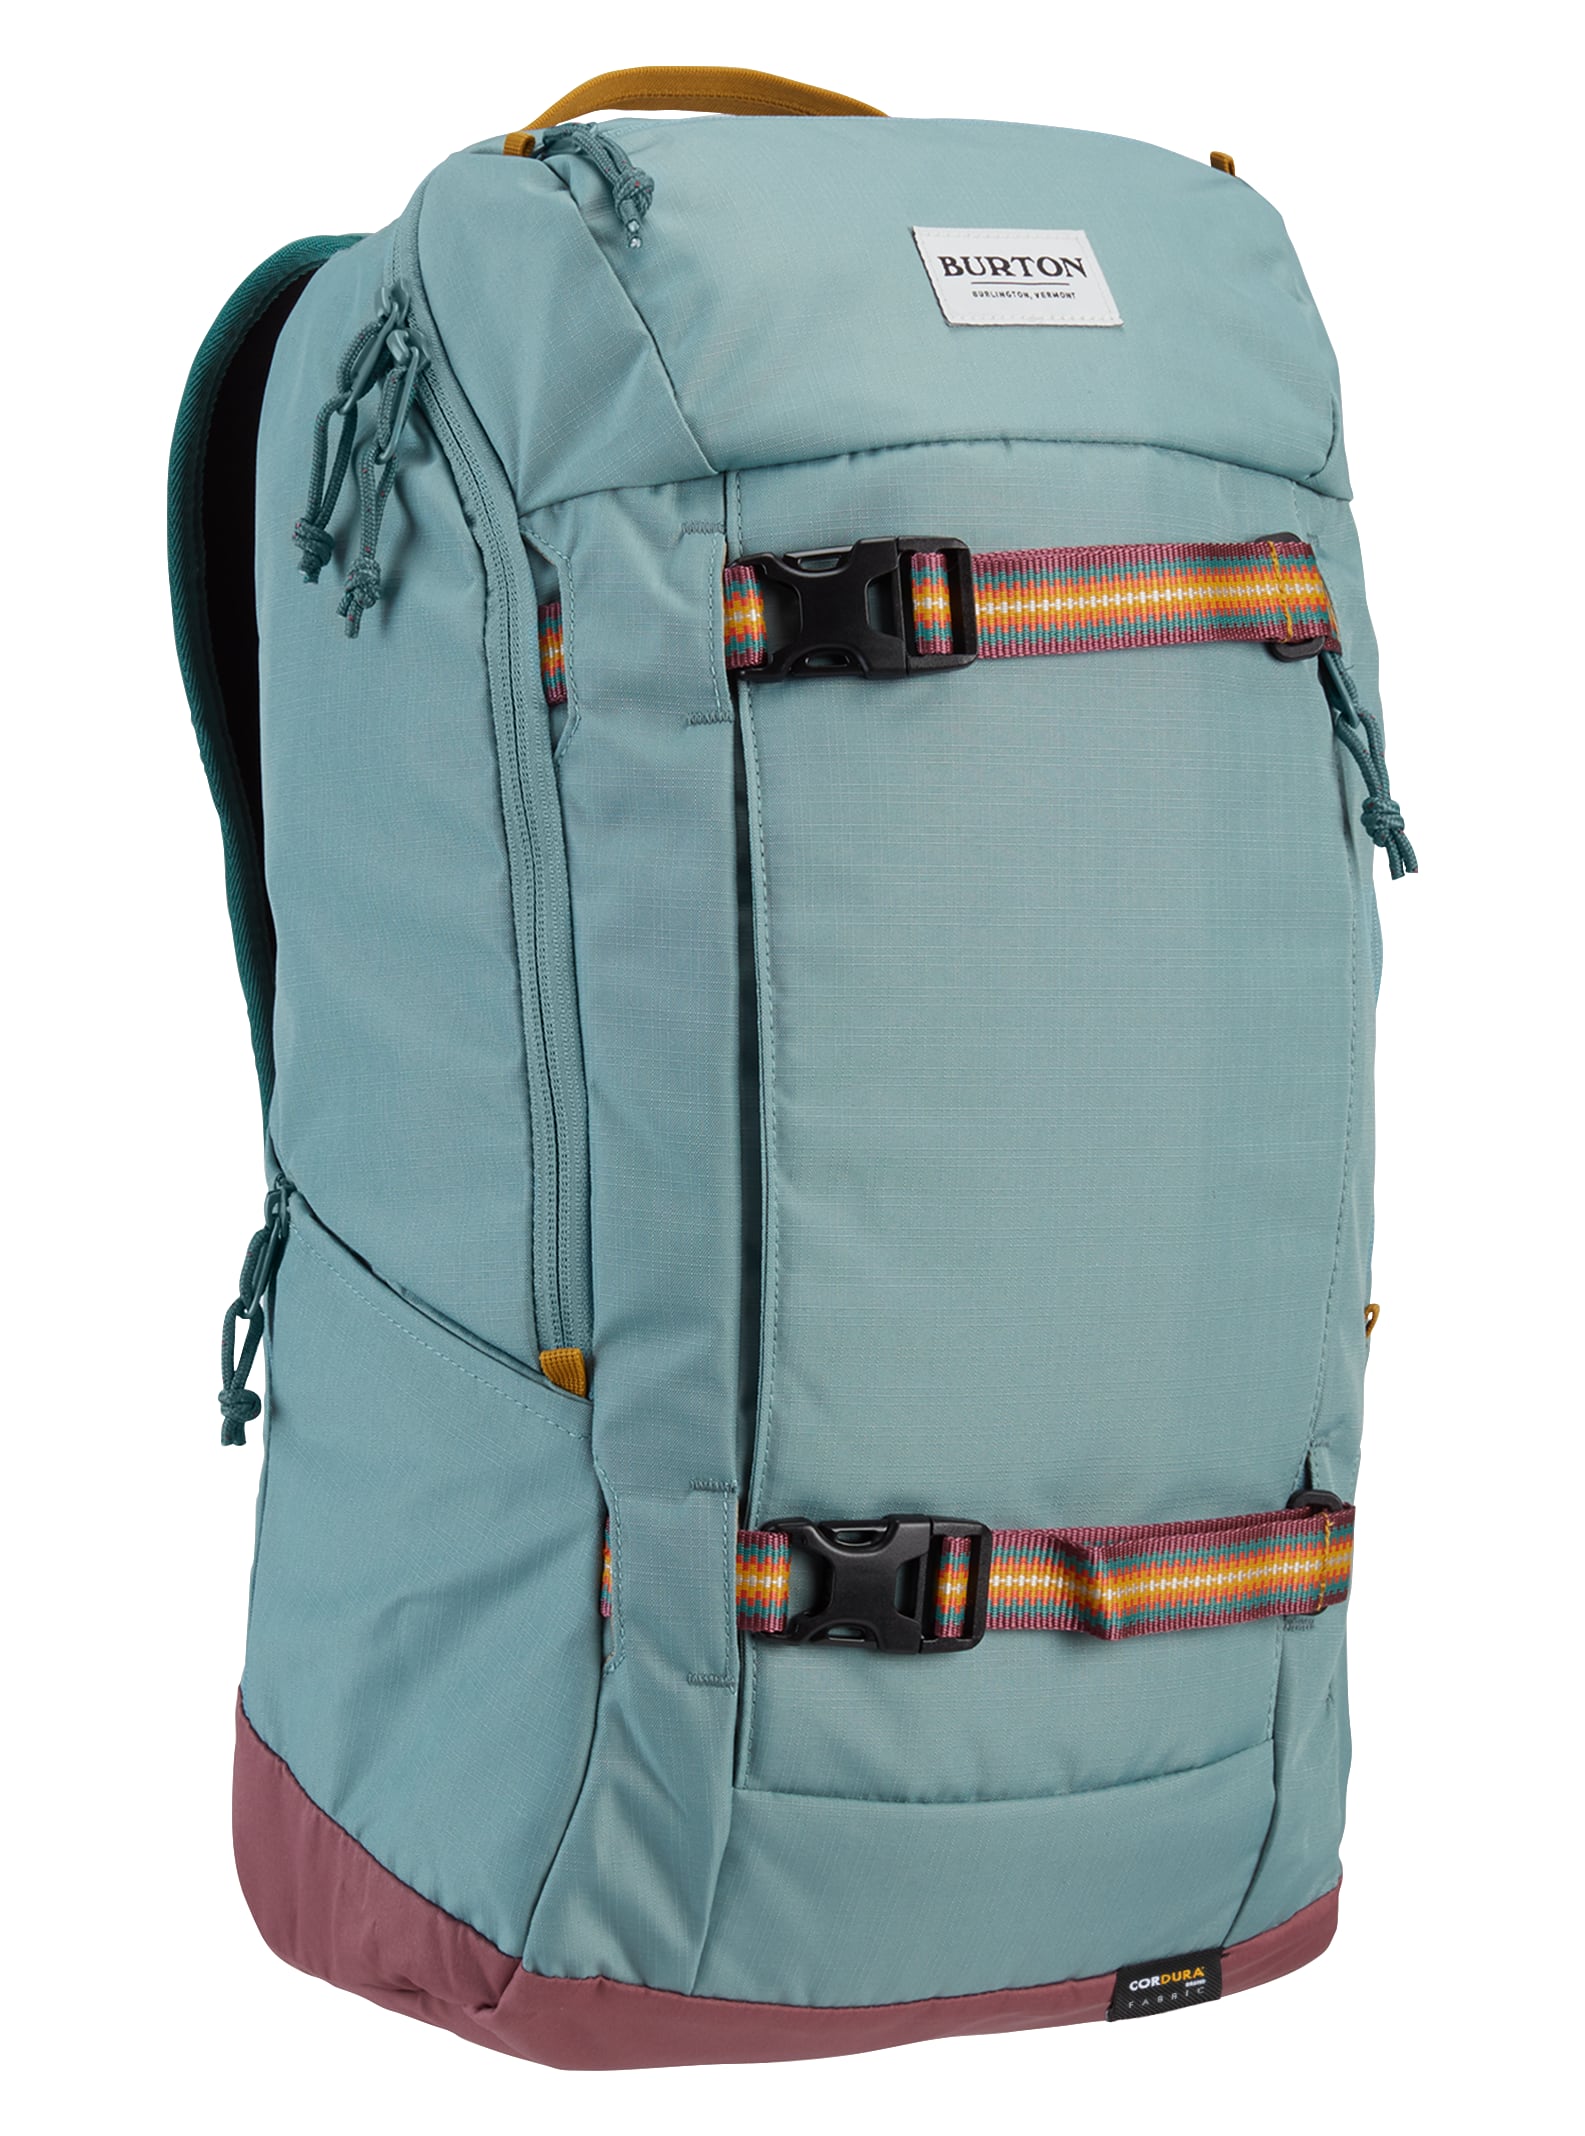 Burton Kilo 2.0 27L Backpack | Burton.com Winter 2021 US